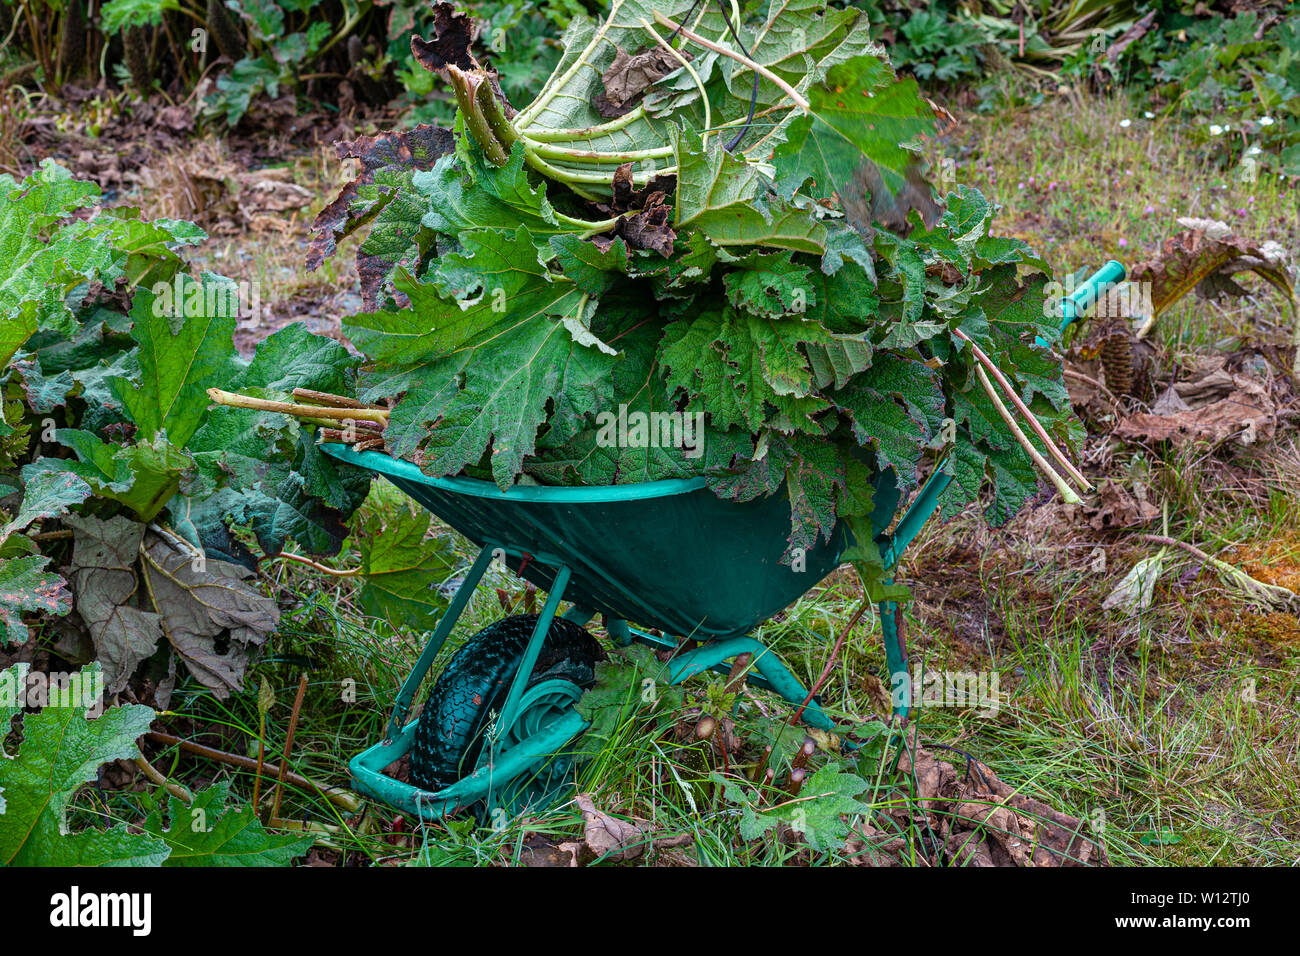 Weeding large Gunnera plants in overgrown garden, County Kerry, Ireland Stock Photo